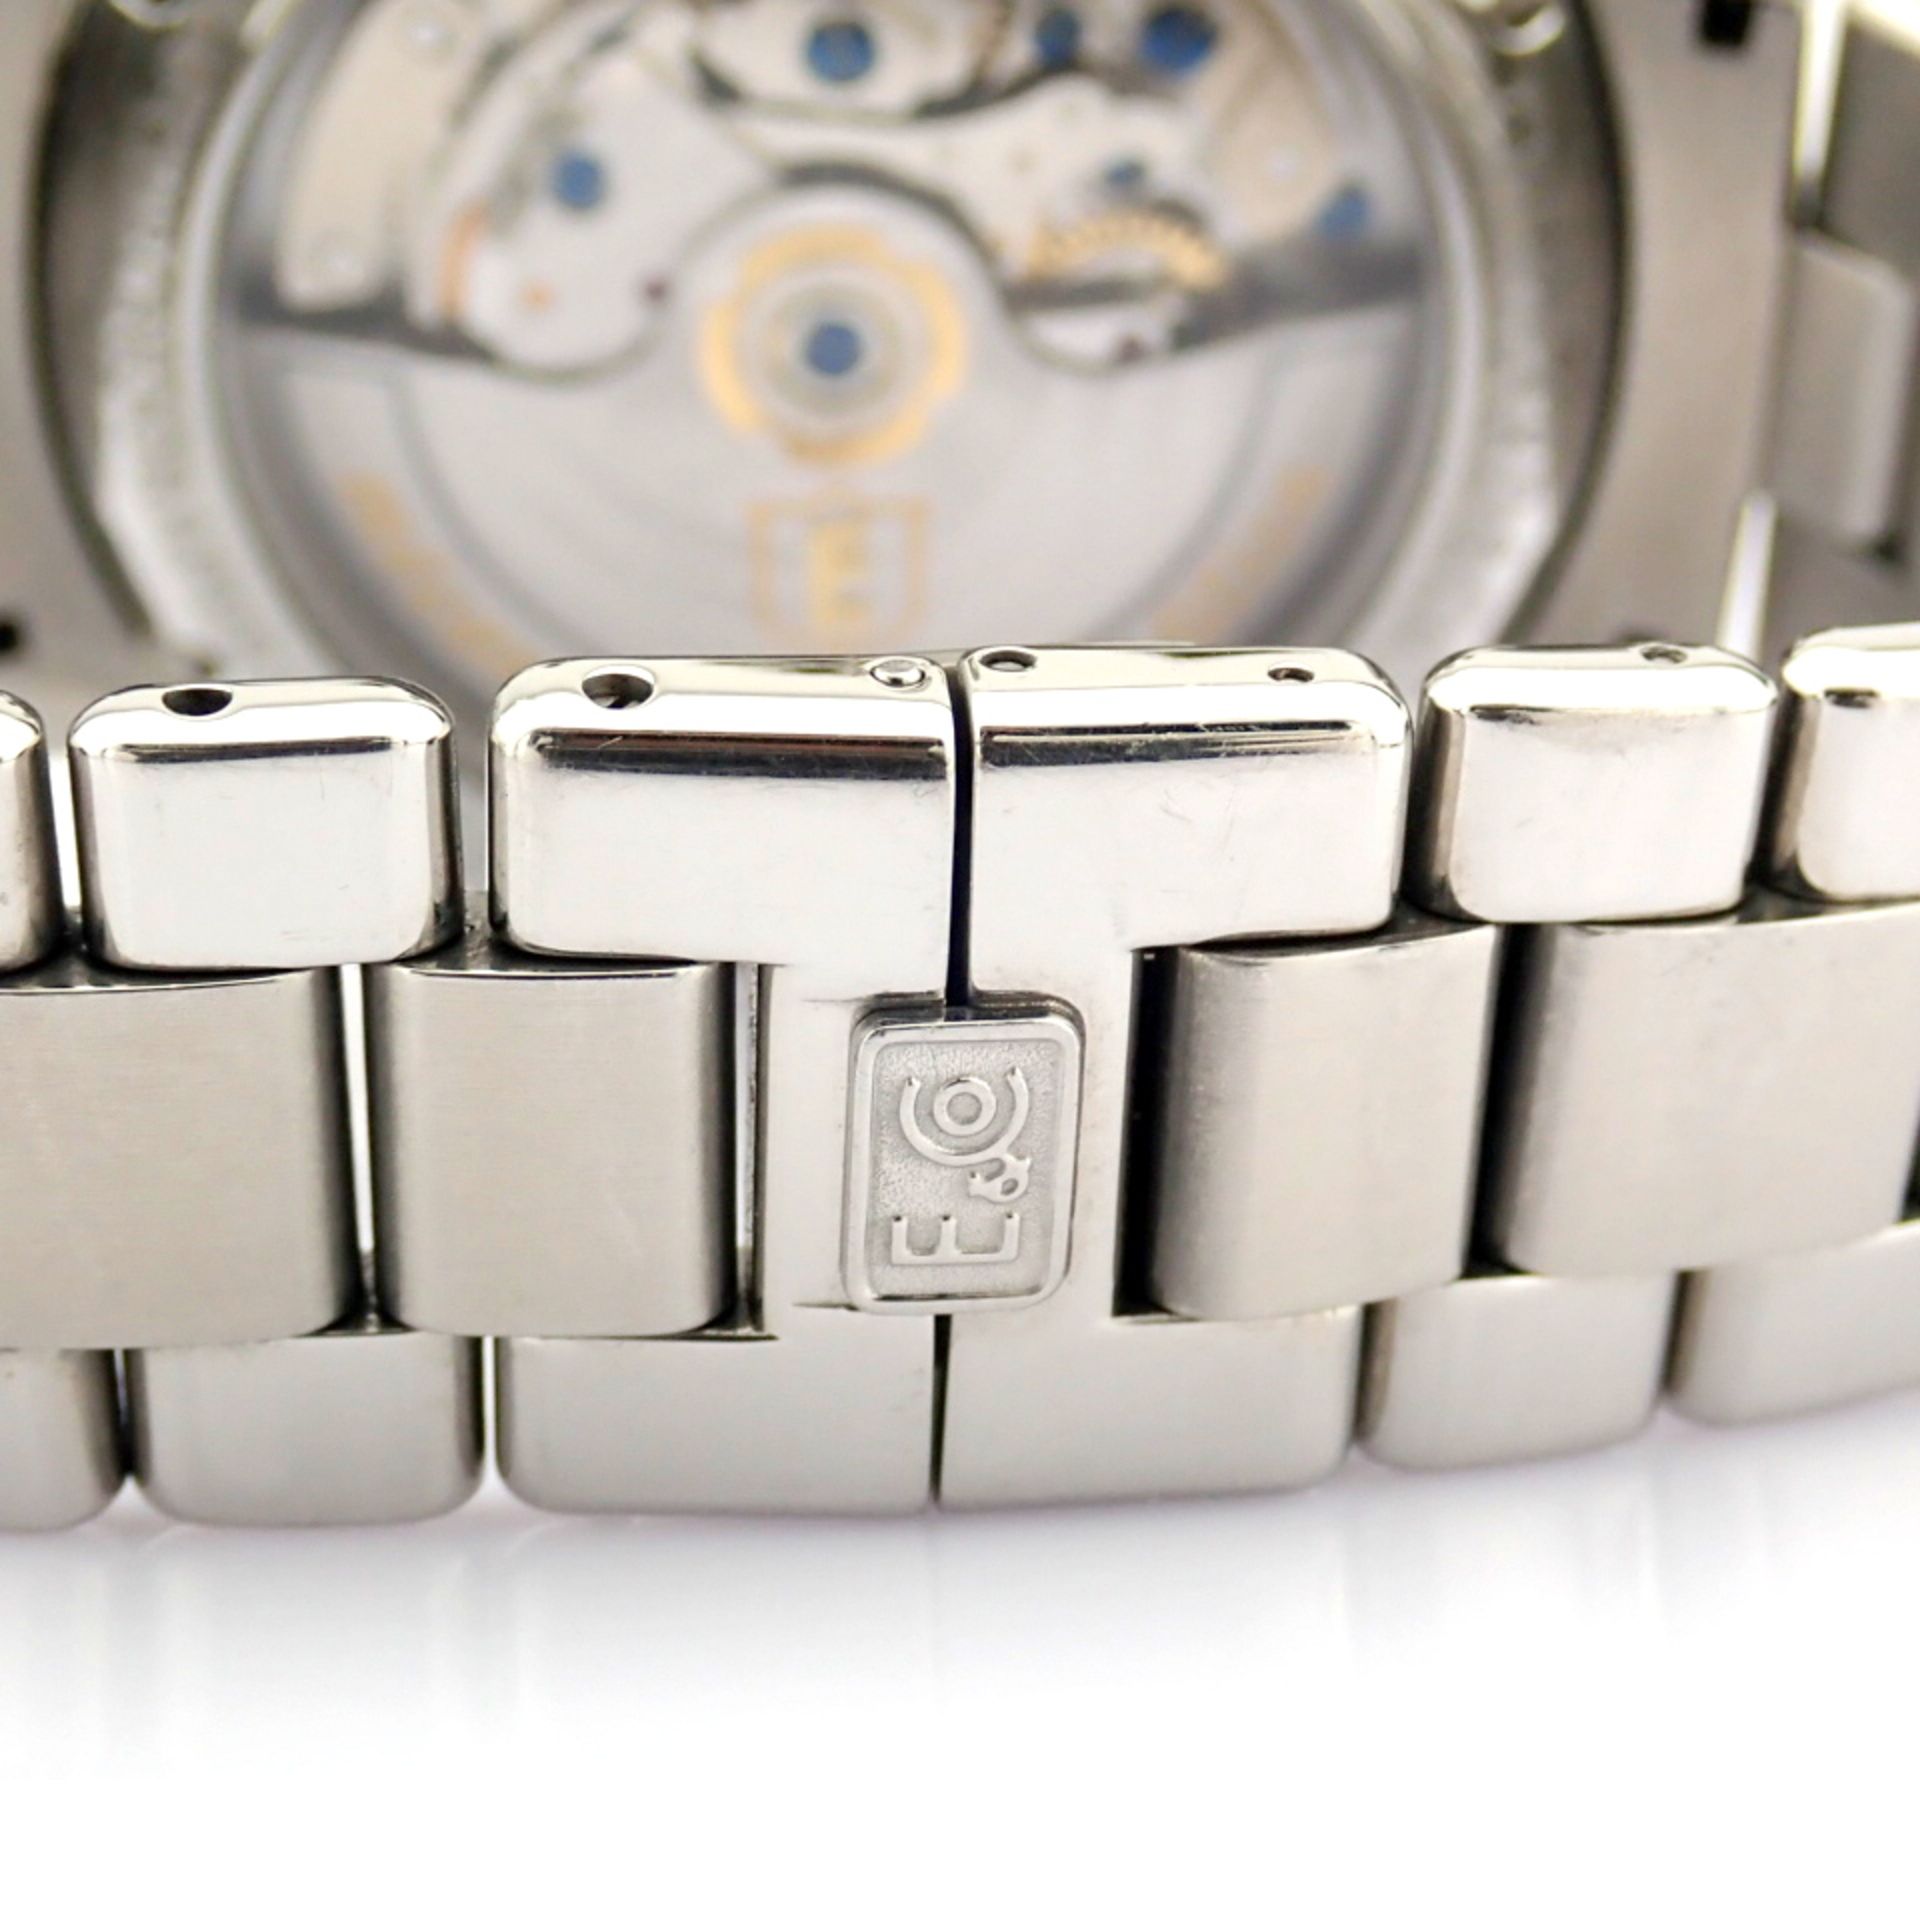 Eberhard & Co. / Traversetolo Chronograph Automatic - Gentlmen's Steel Wrist Watch - Image 2 of 11